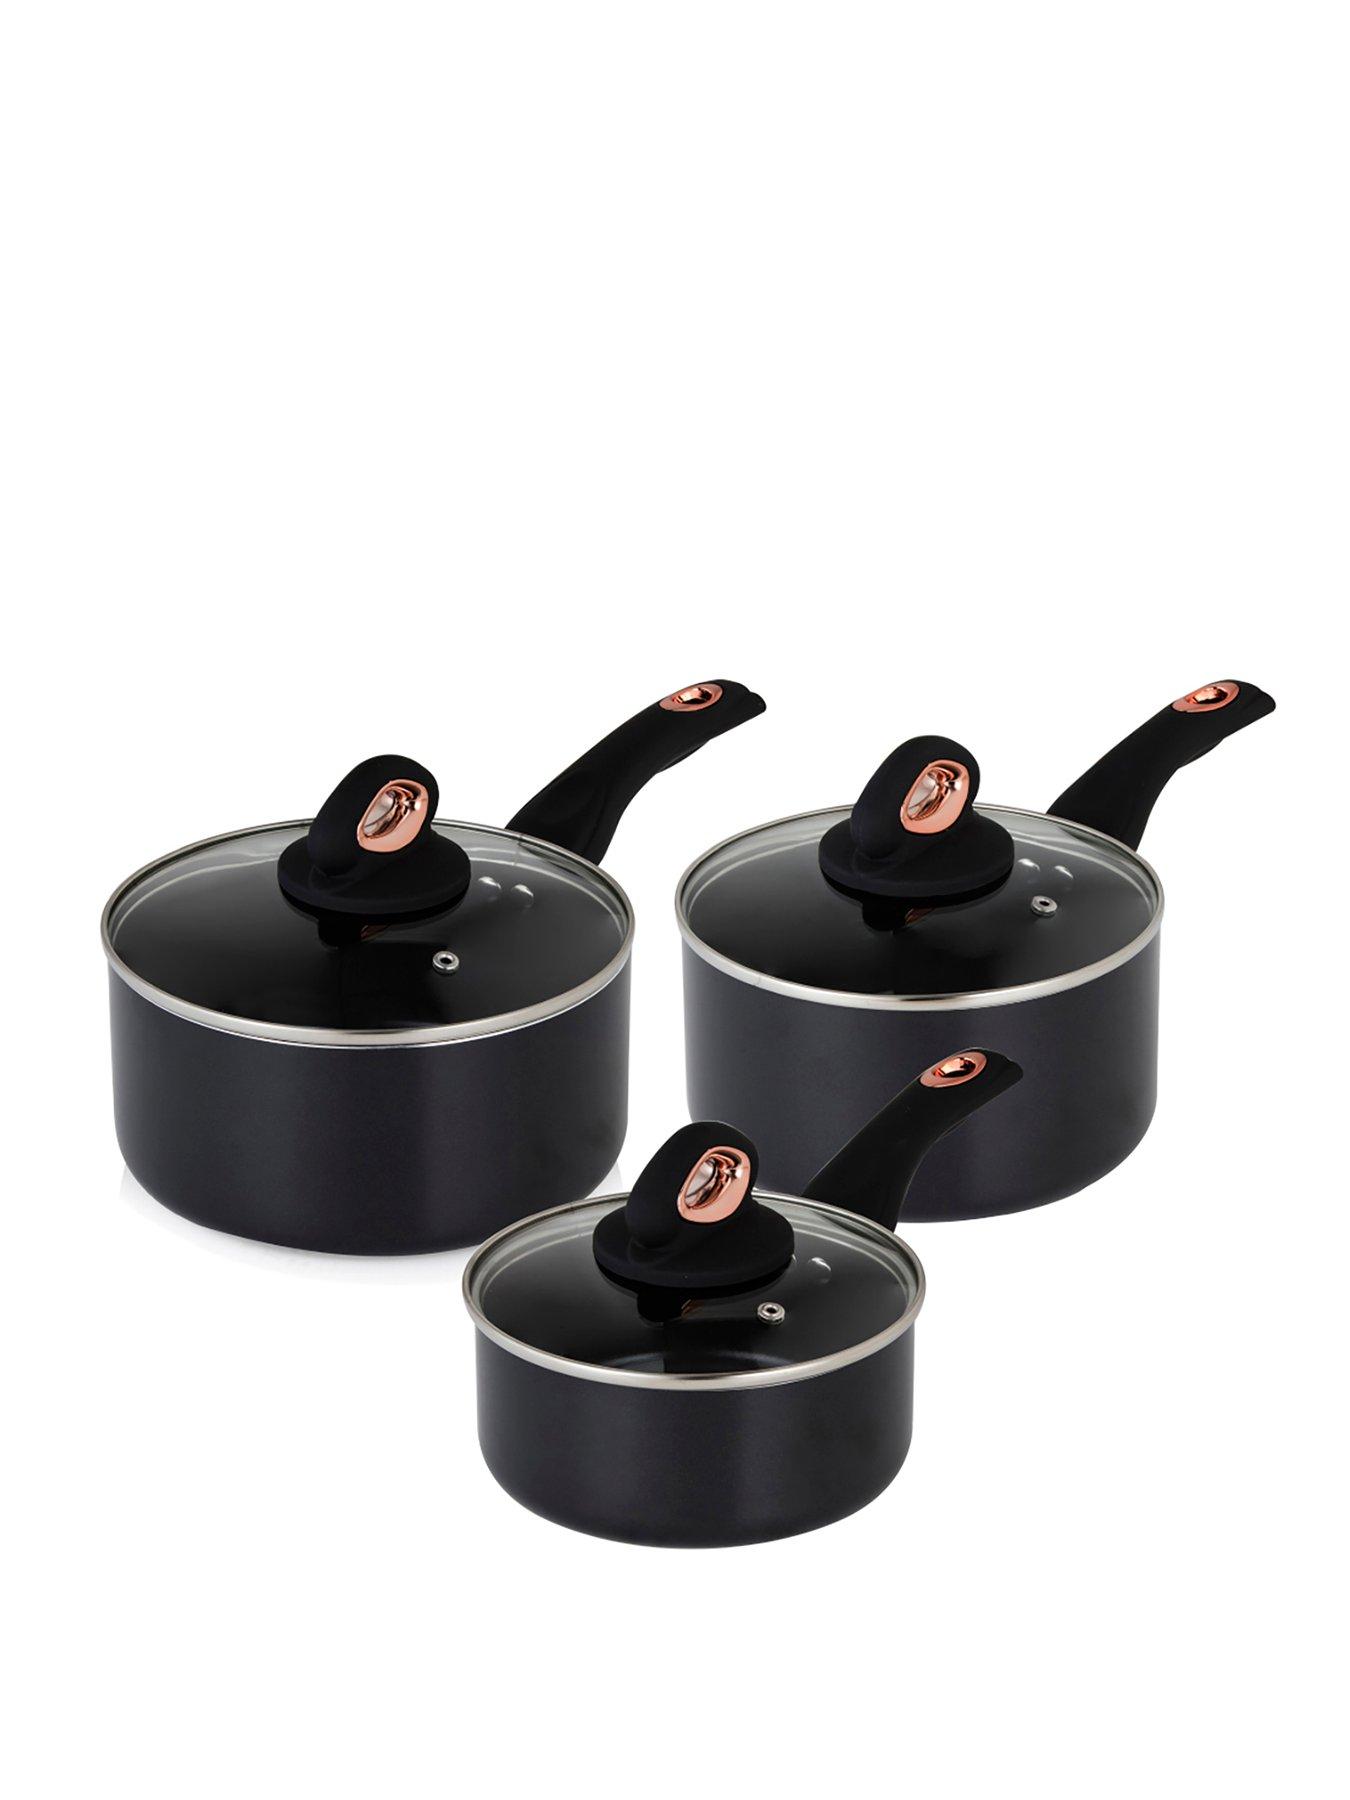 Details about   3 Tiers 27.3cm Steamer Cooker Pot Set Stainless Steamer Kitchen Pot Glass Lid 